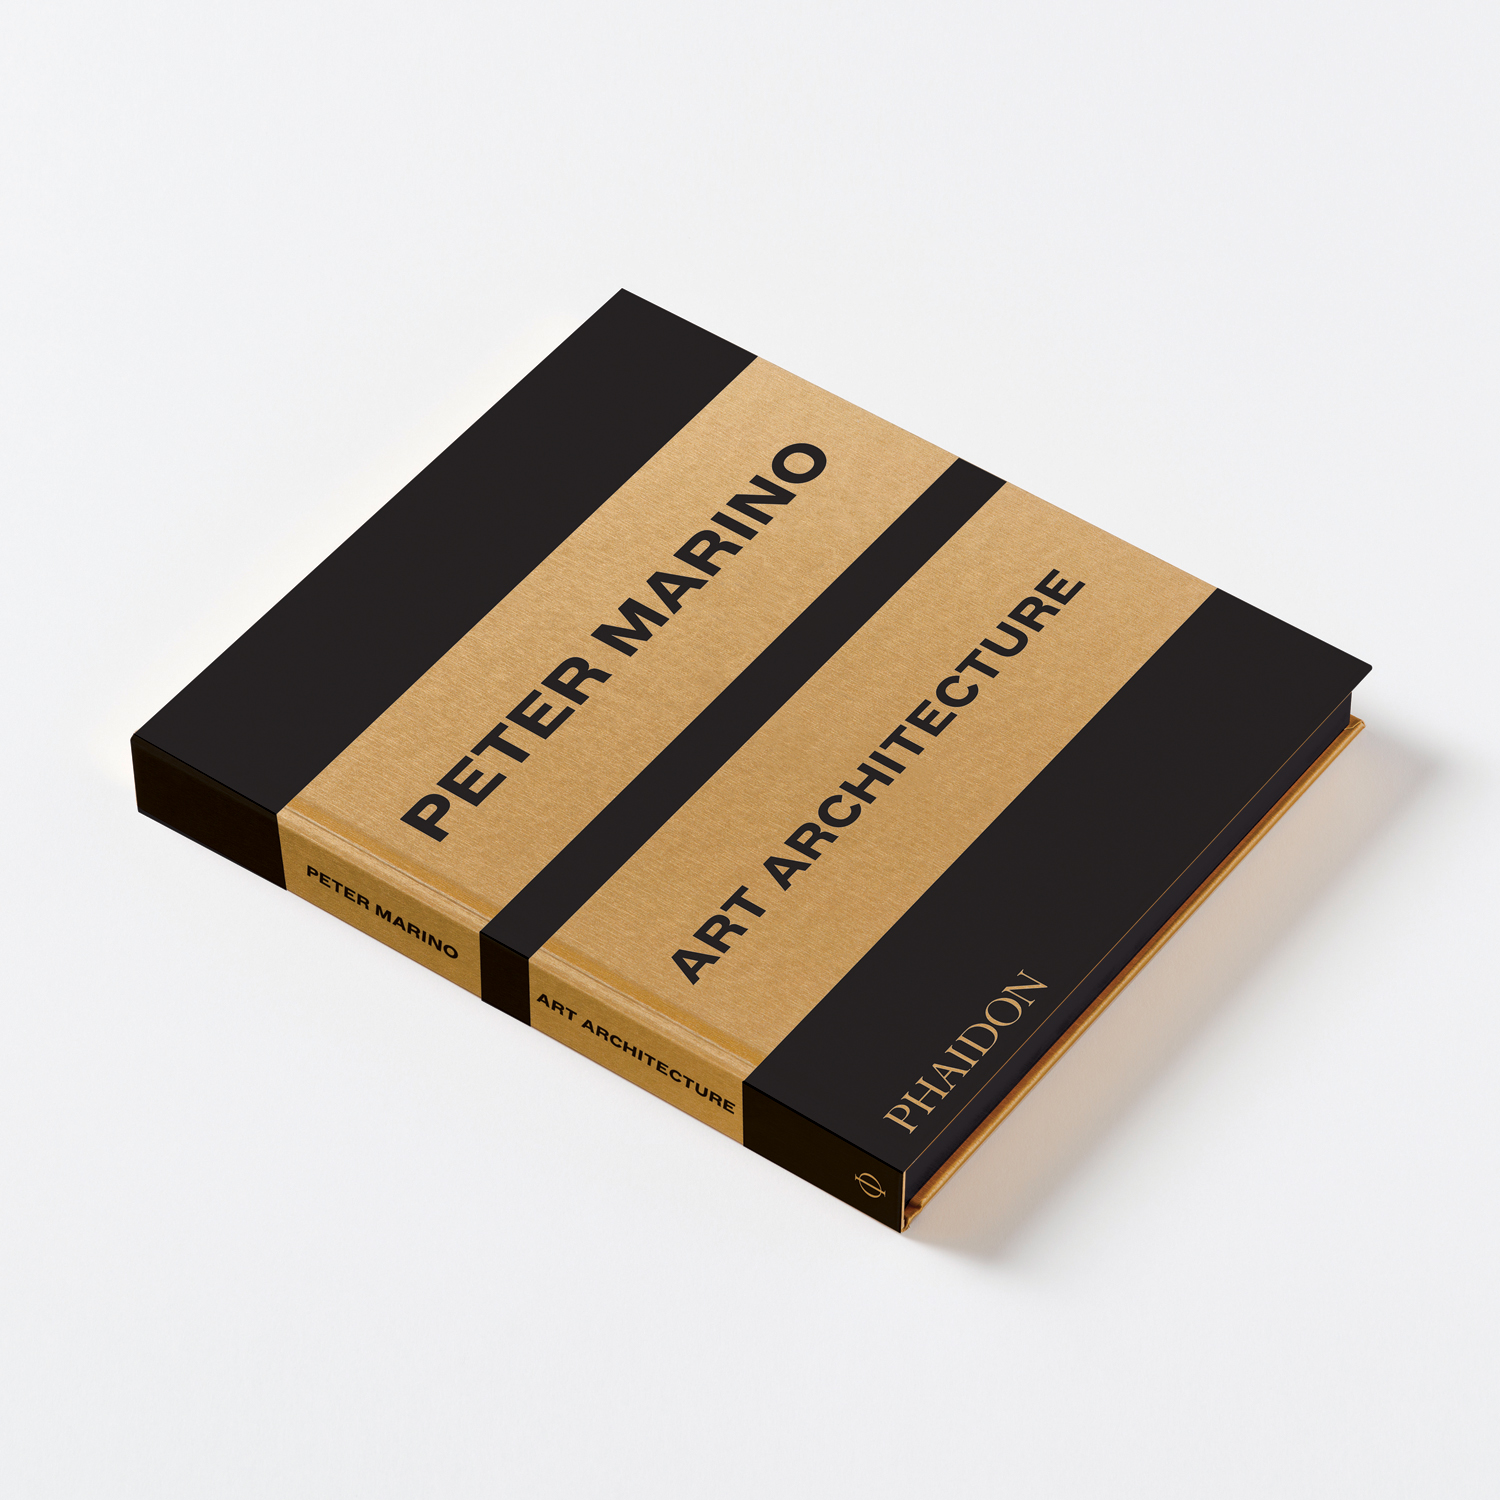 The luxury edition of Peter Marino: Art Architecture